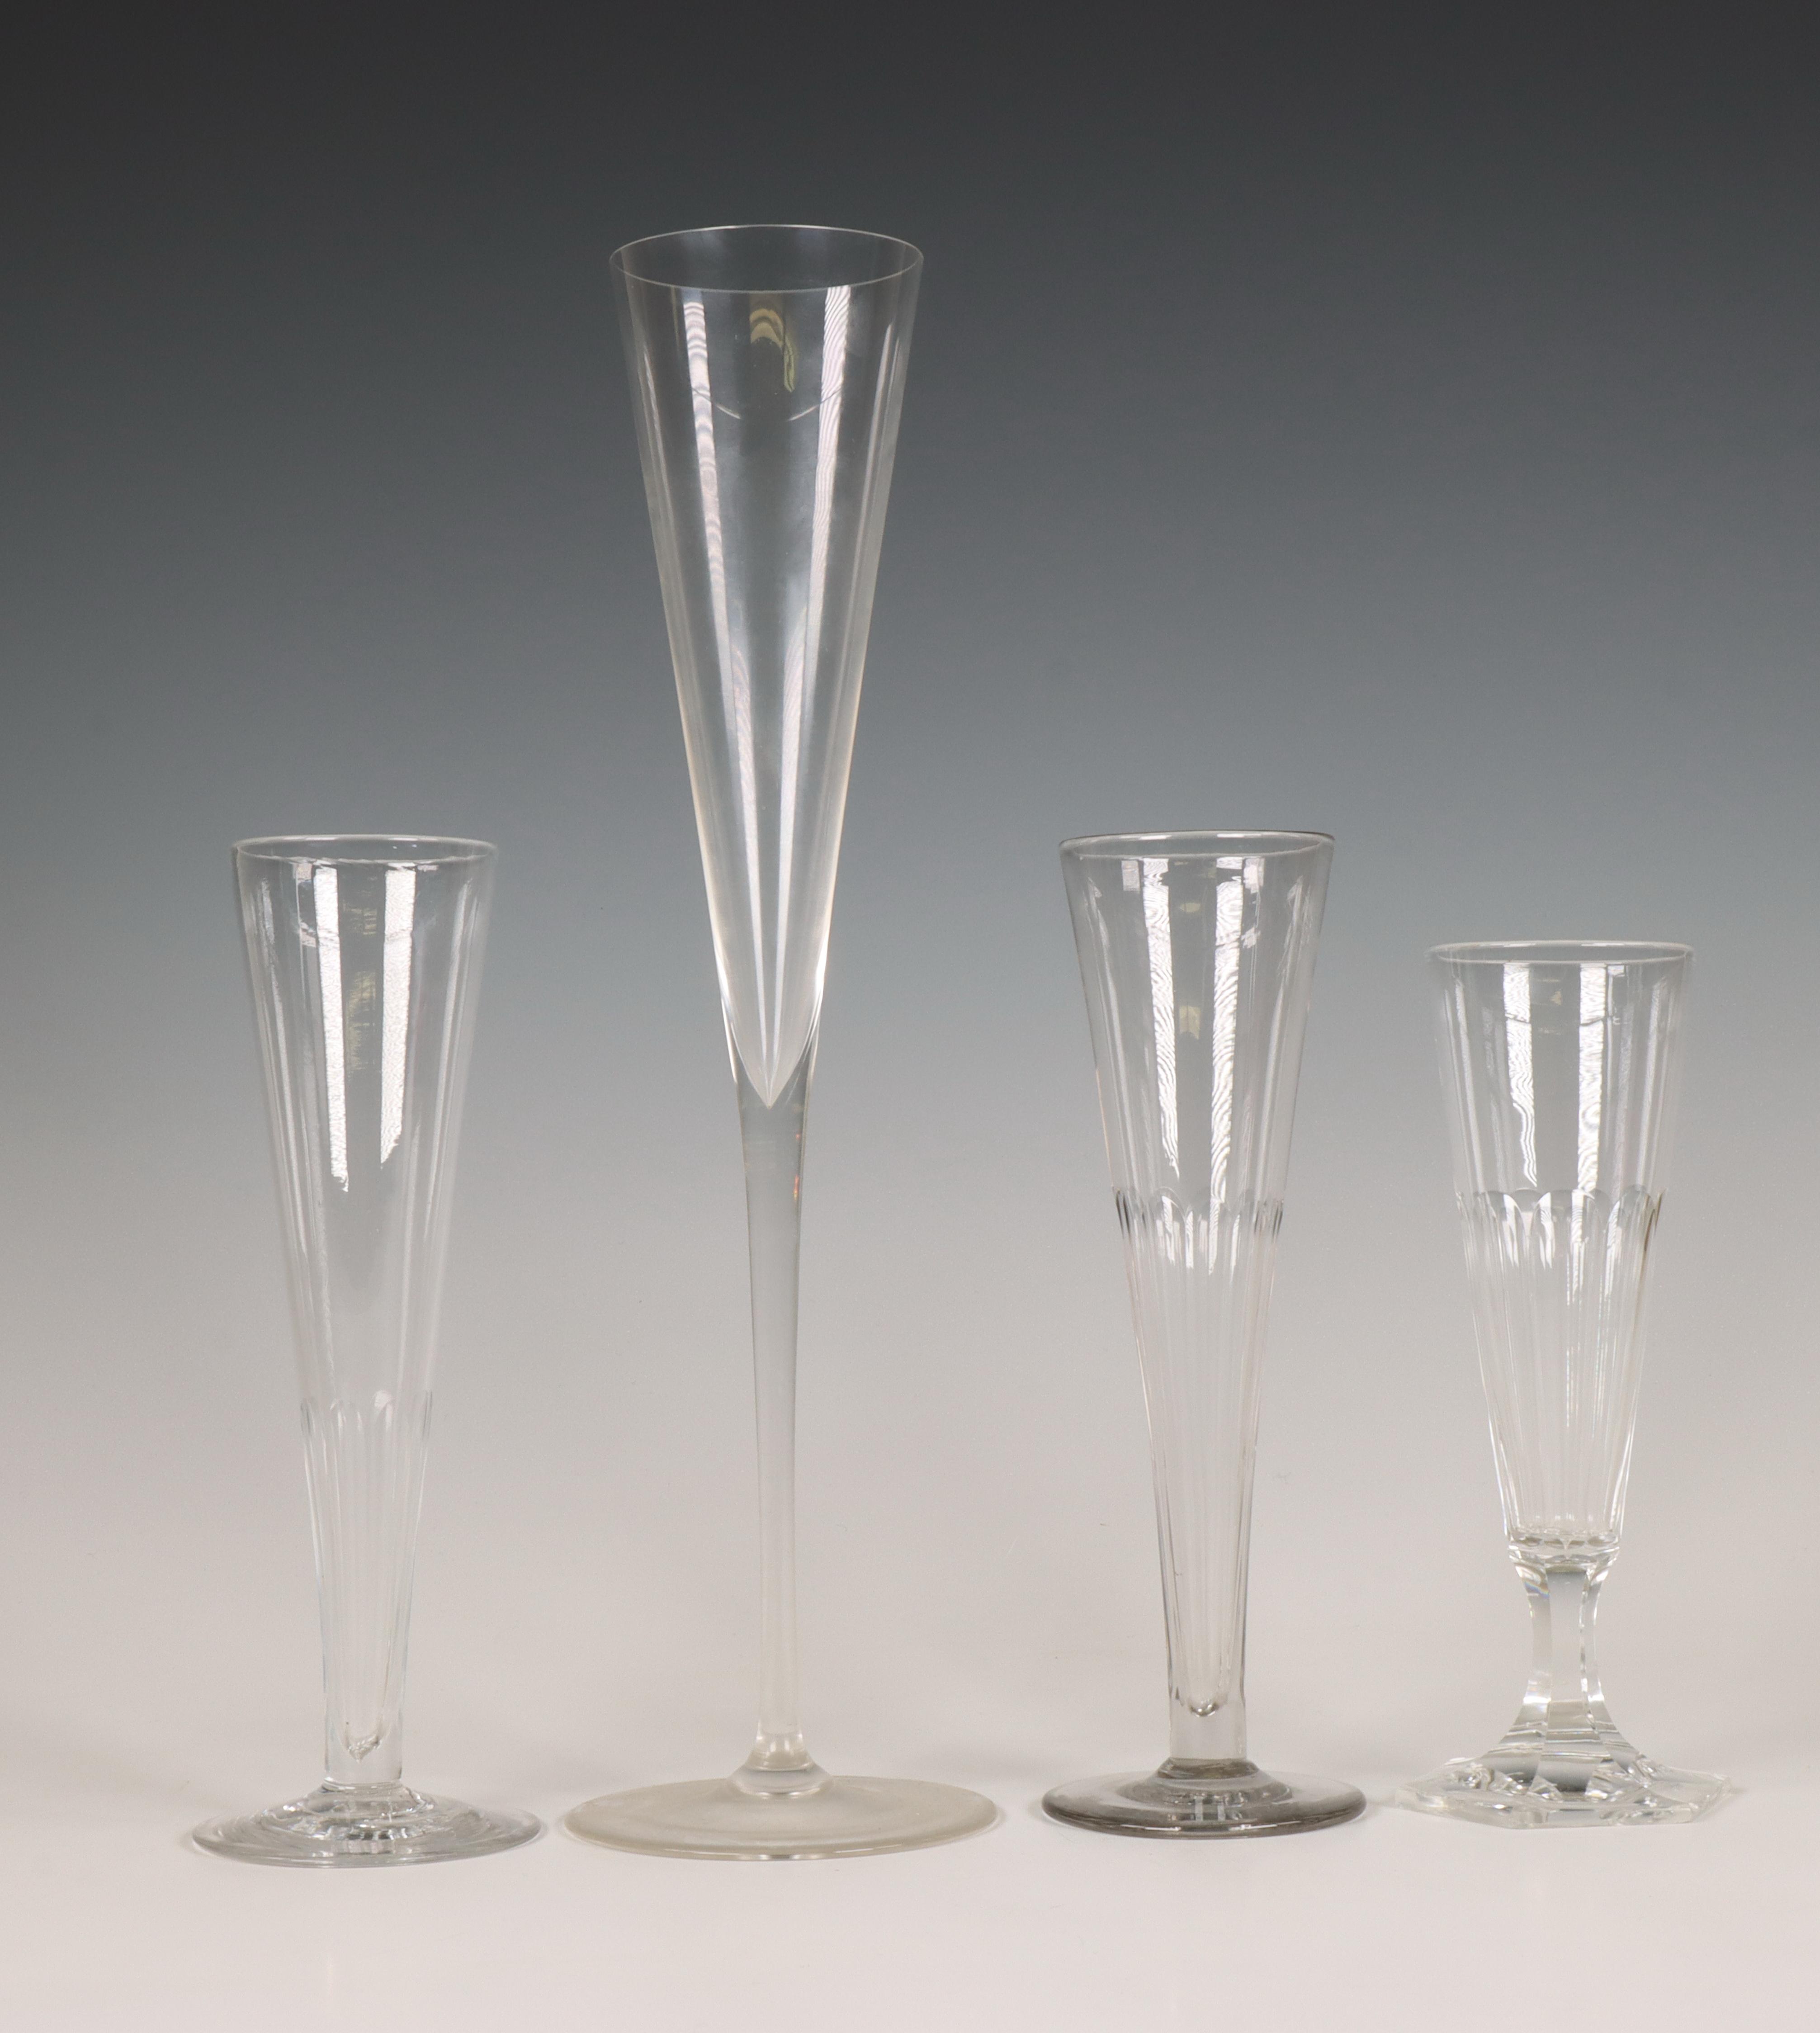 Achtenendertig kristallen en glazen champagne flutes, 19e-20e eeuw;